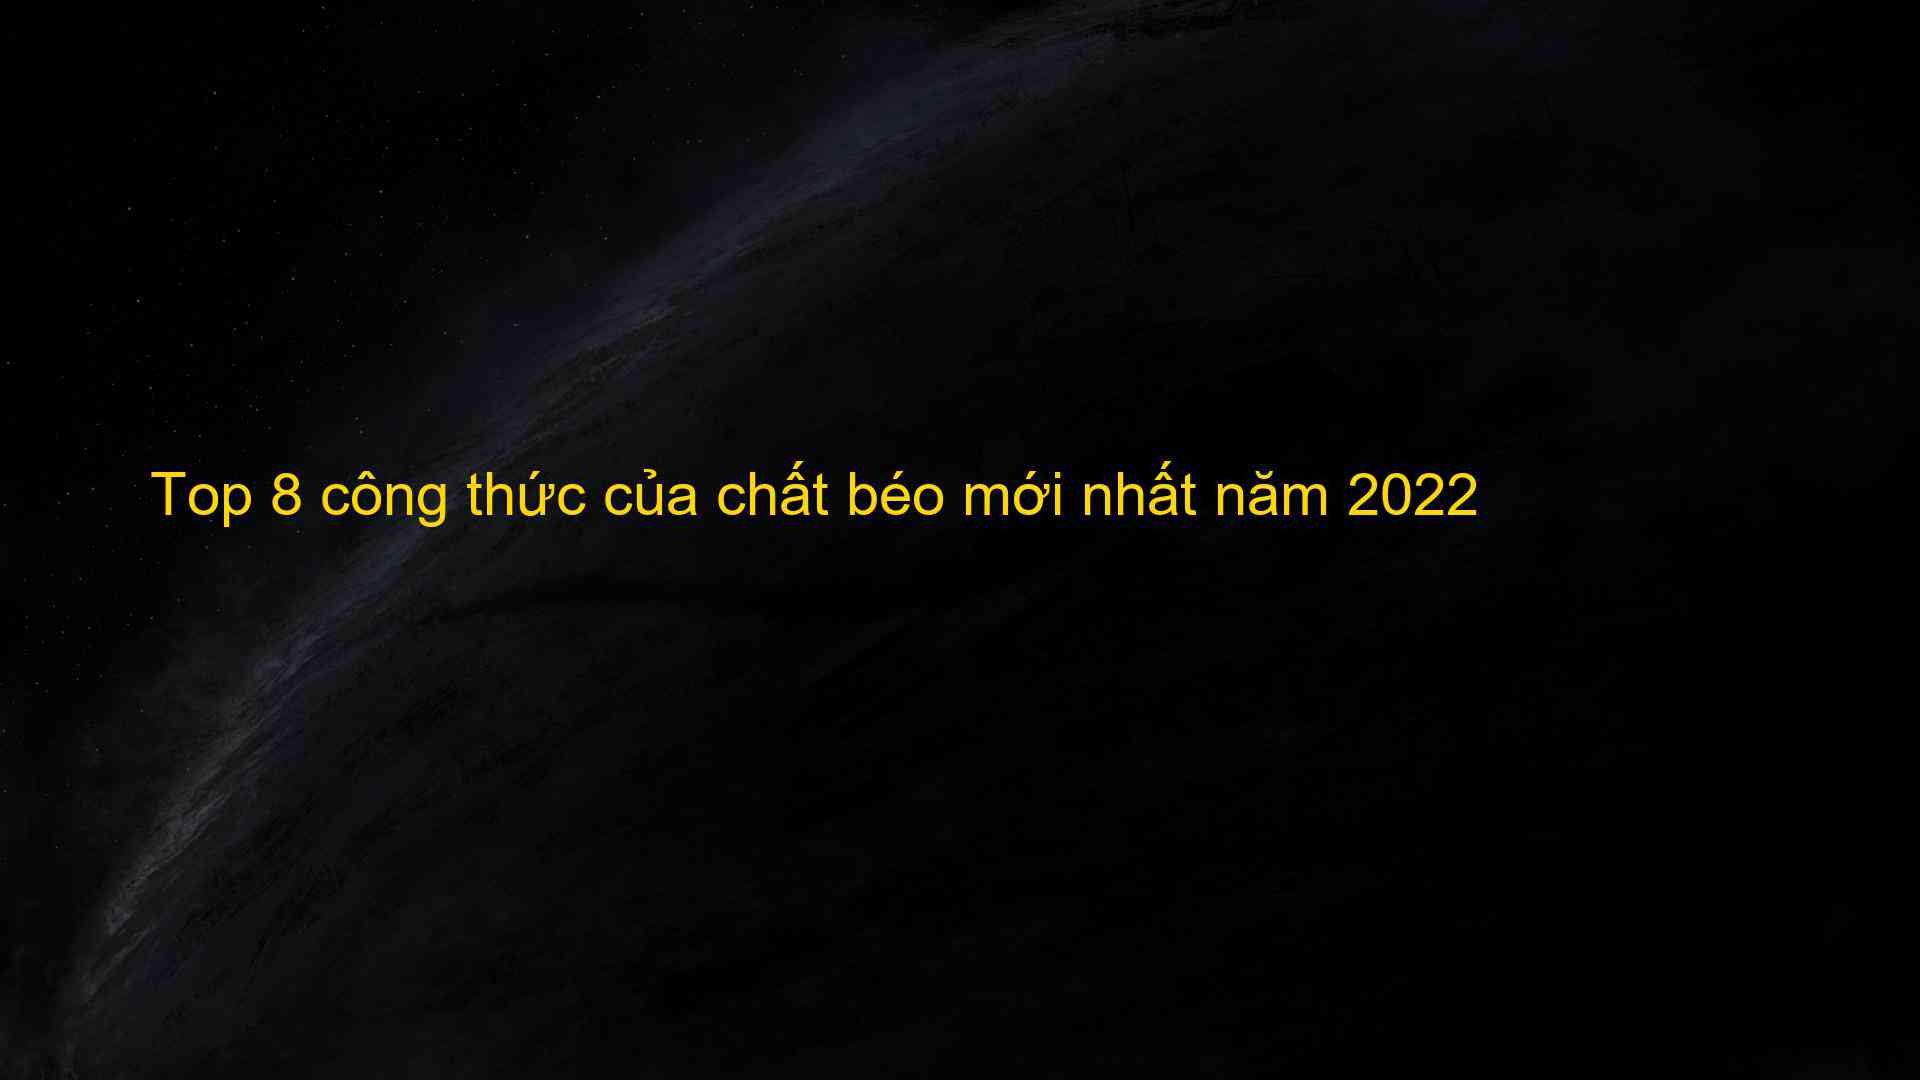 Top 8 cong thuc cua chat beo moi nhat nam 2022 1659779295